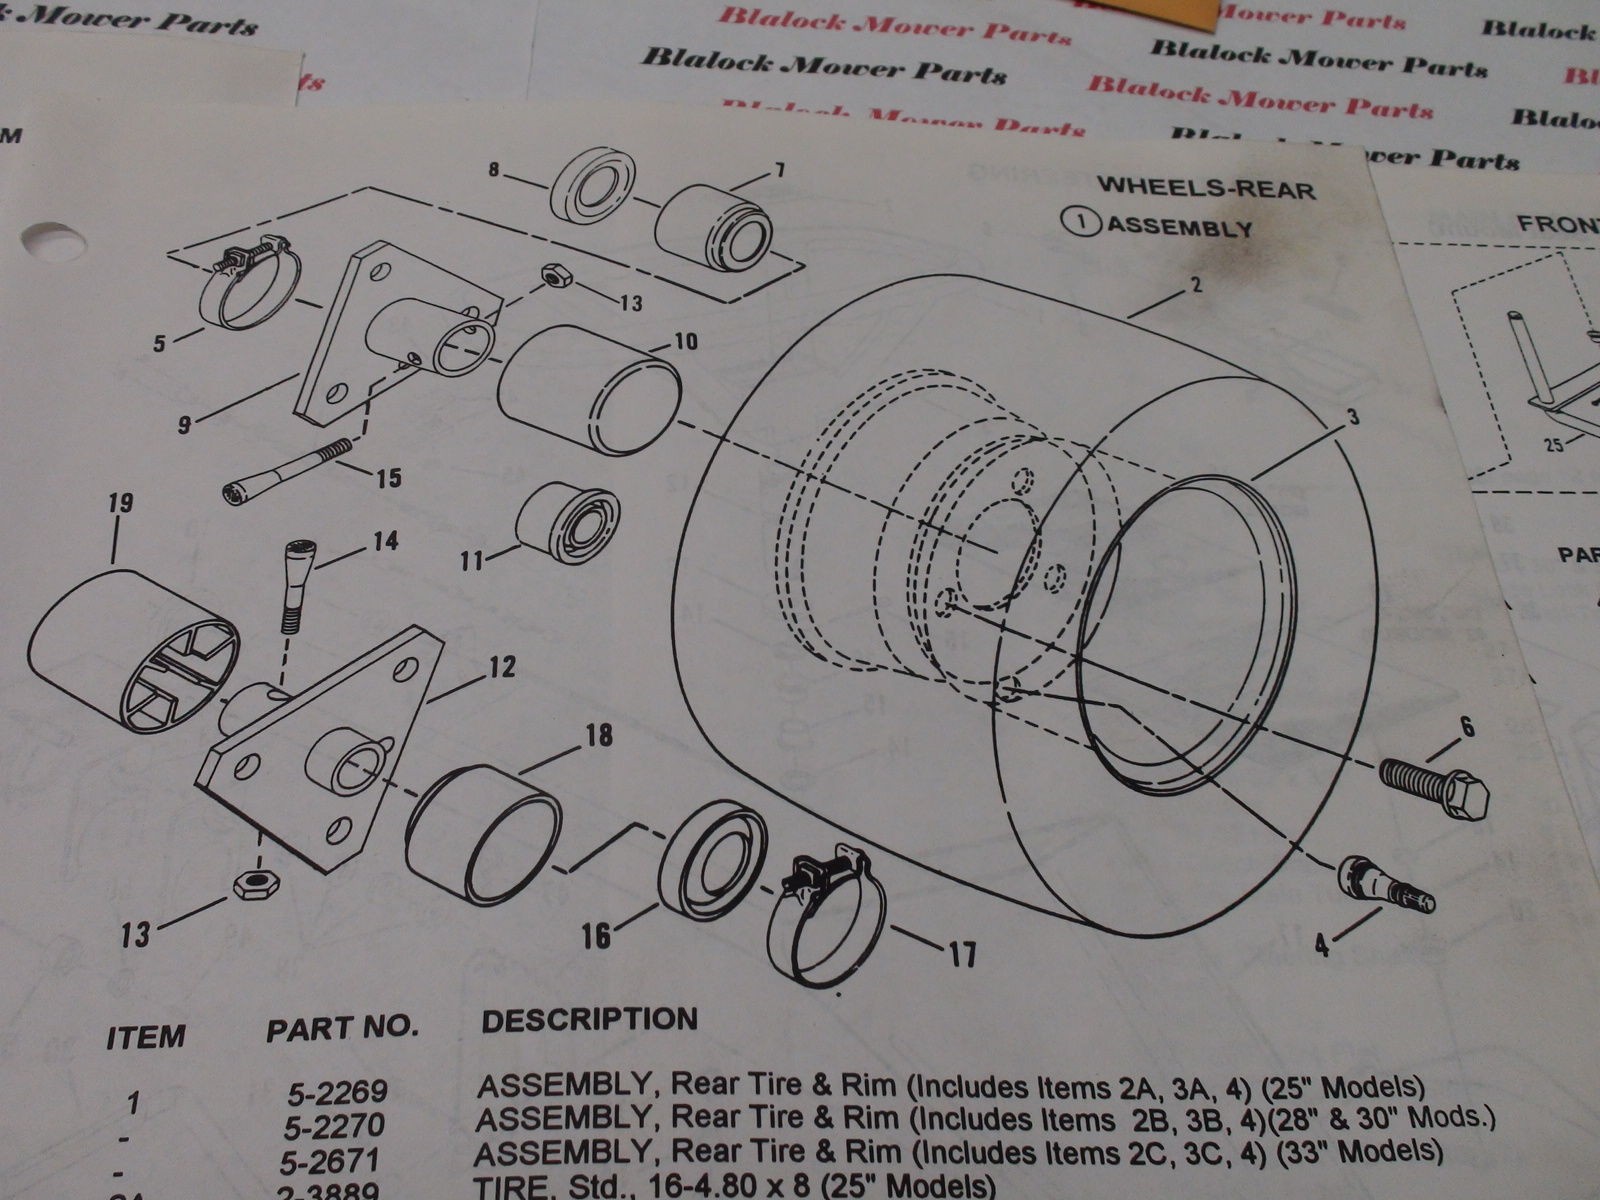 Honda Gx240 Parts Diagram Snapper Series 15 Rear Engine Rider Parts Manual Of Honda Gx240 Parts Diagram